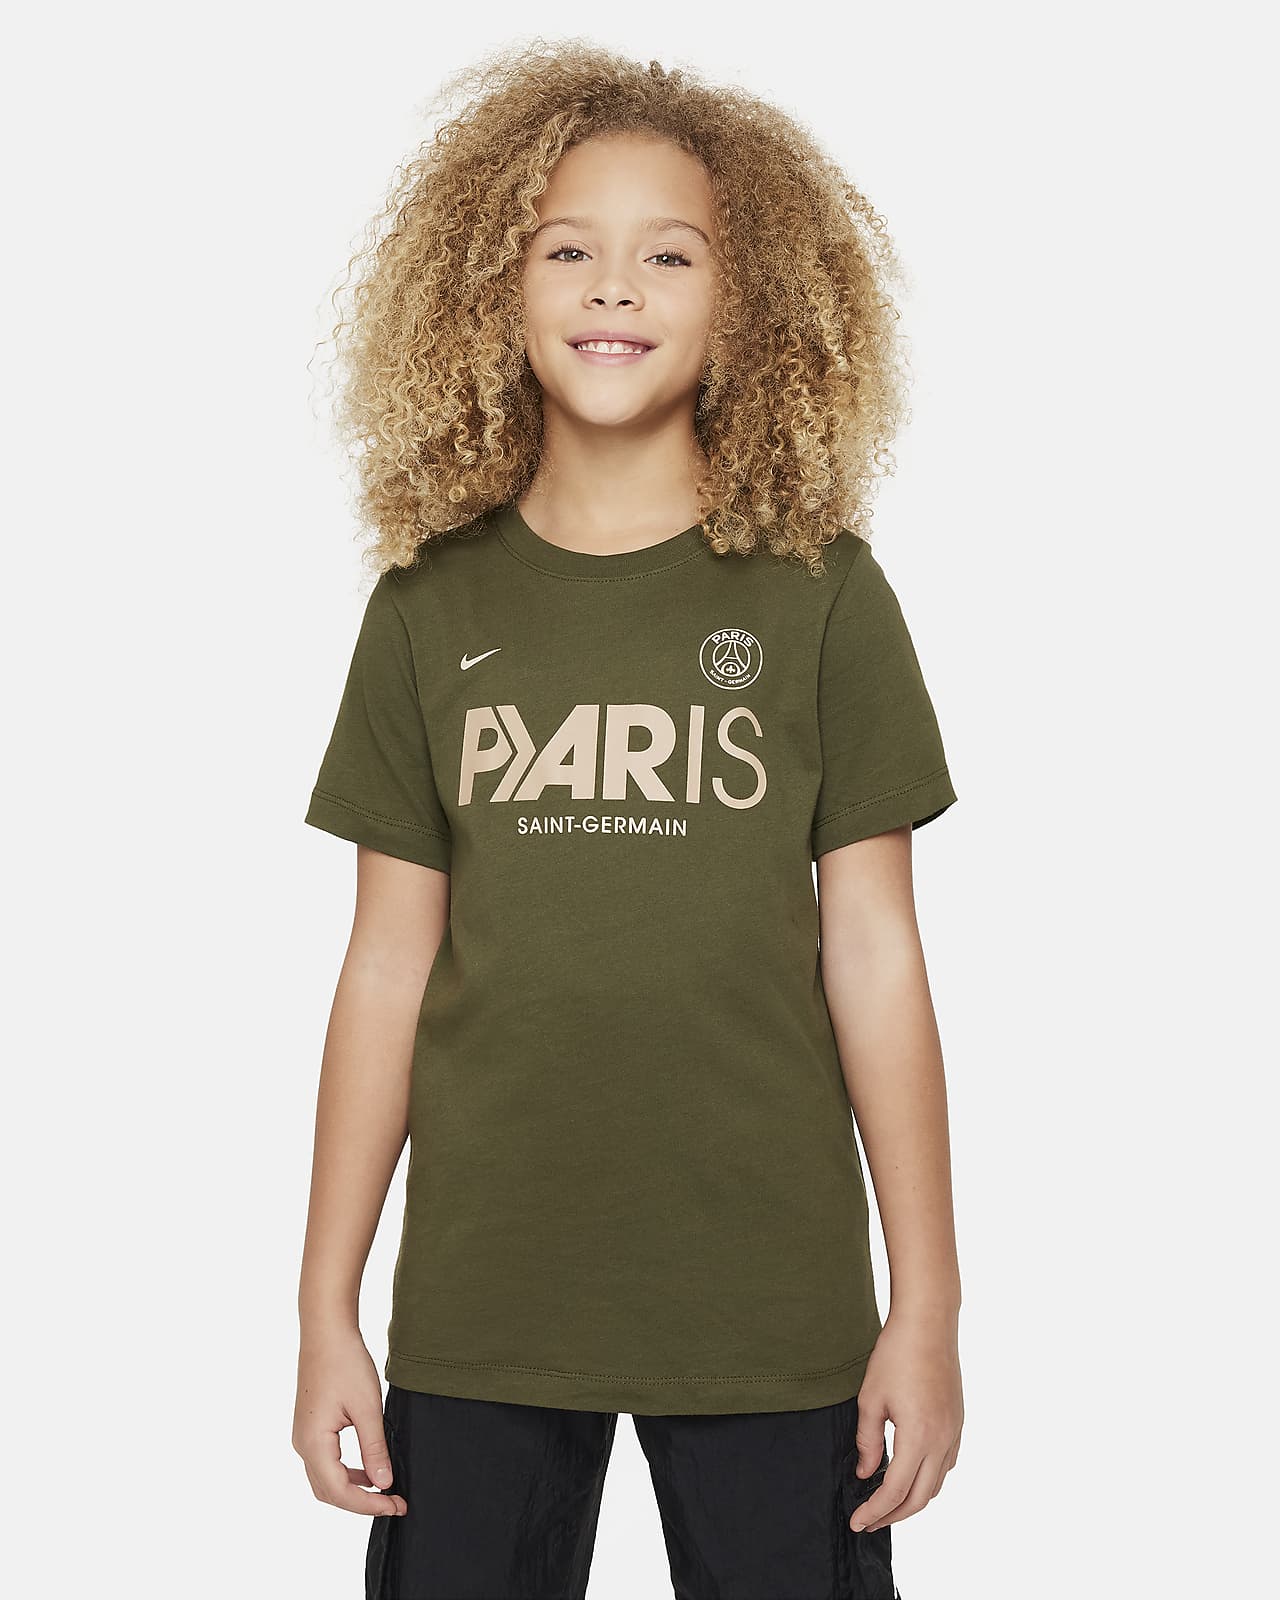 París Saint-Germain Mercurial Camiseta Nike Football - Niño/a